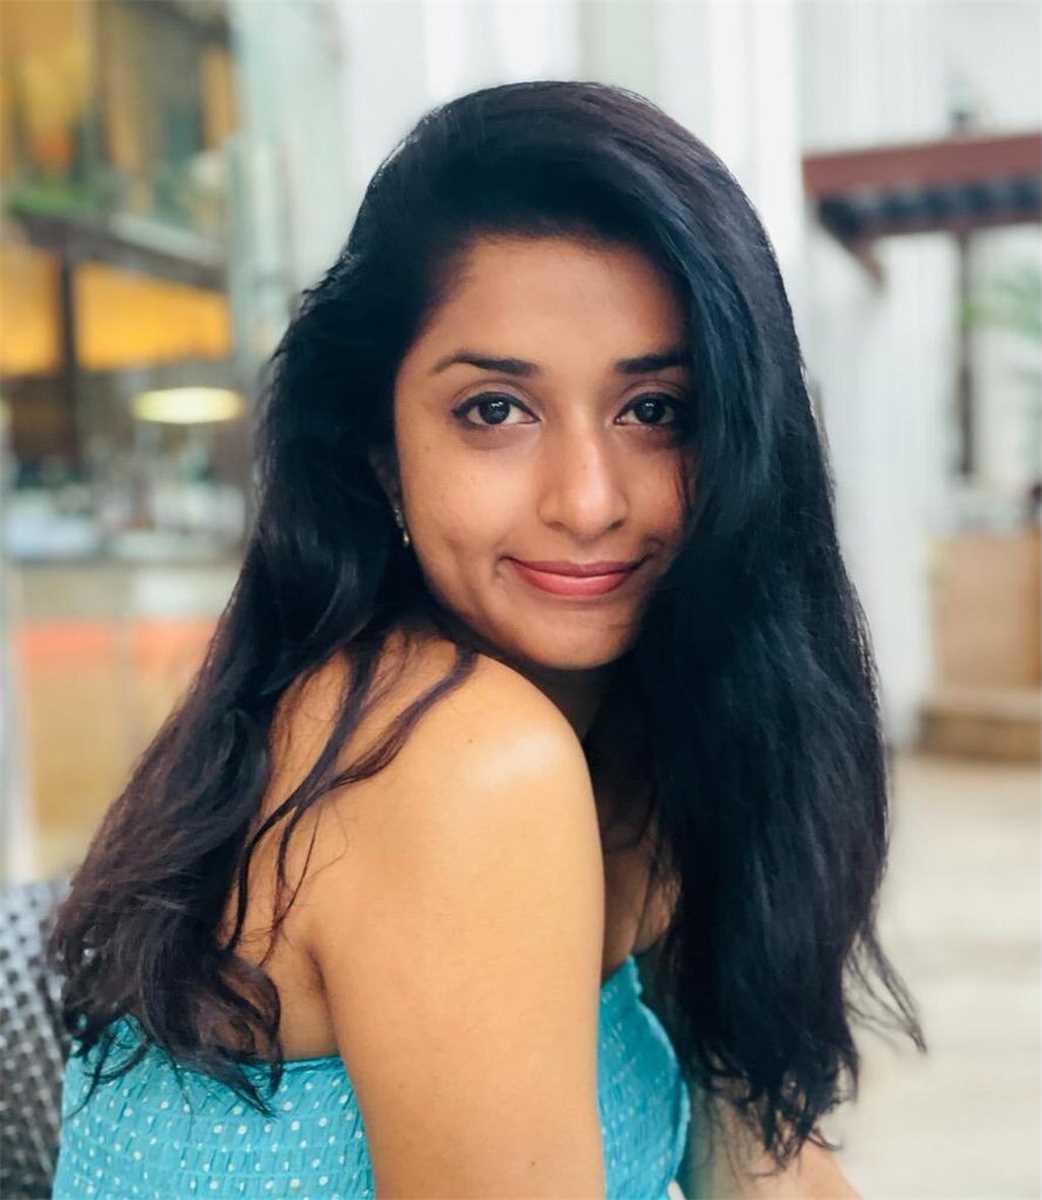 Meera jasmine latest post with spray bottle getting trend on social media